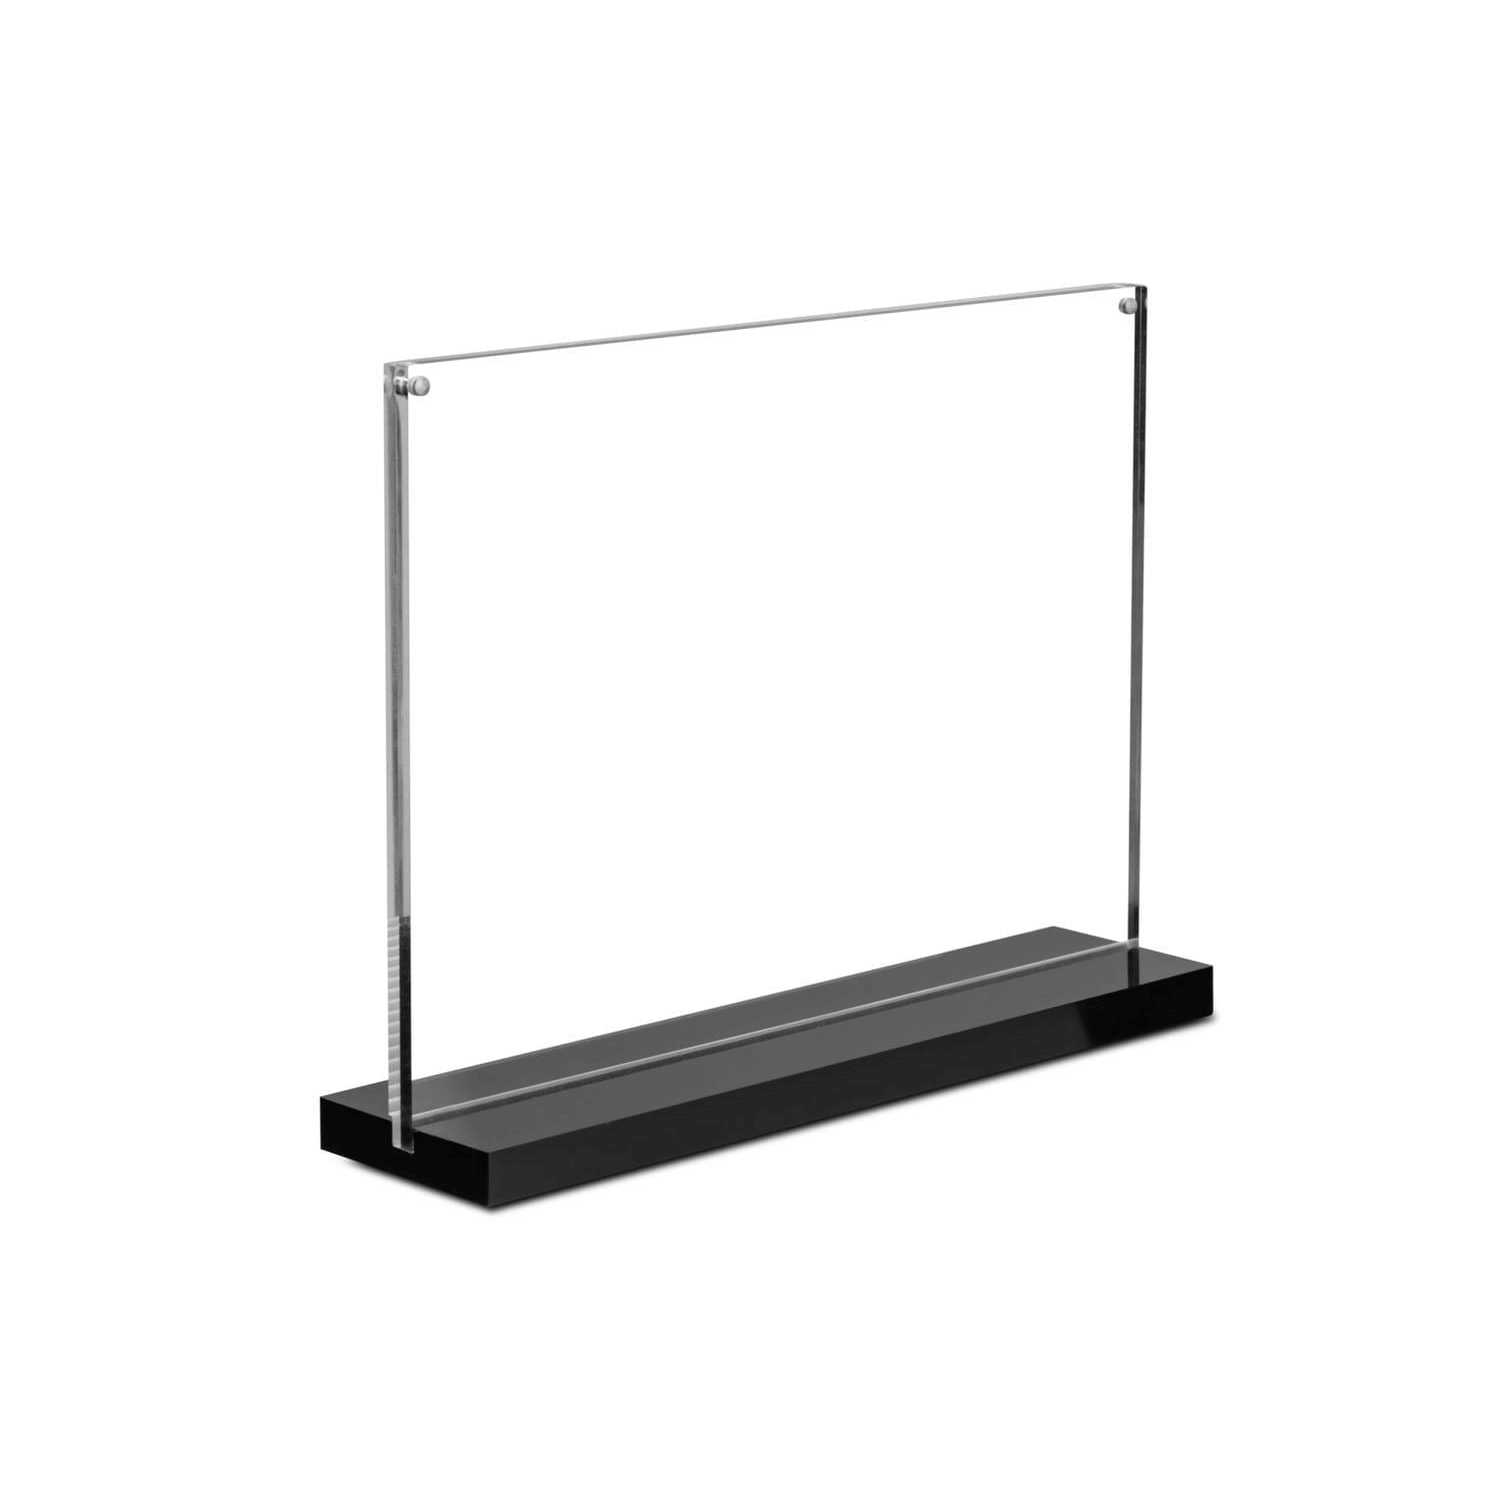 Suport Display Plexiglas Vista - de la 26.74 LEI |  PRINTCENTER - Tipar digital, offset, indoor, outdoor